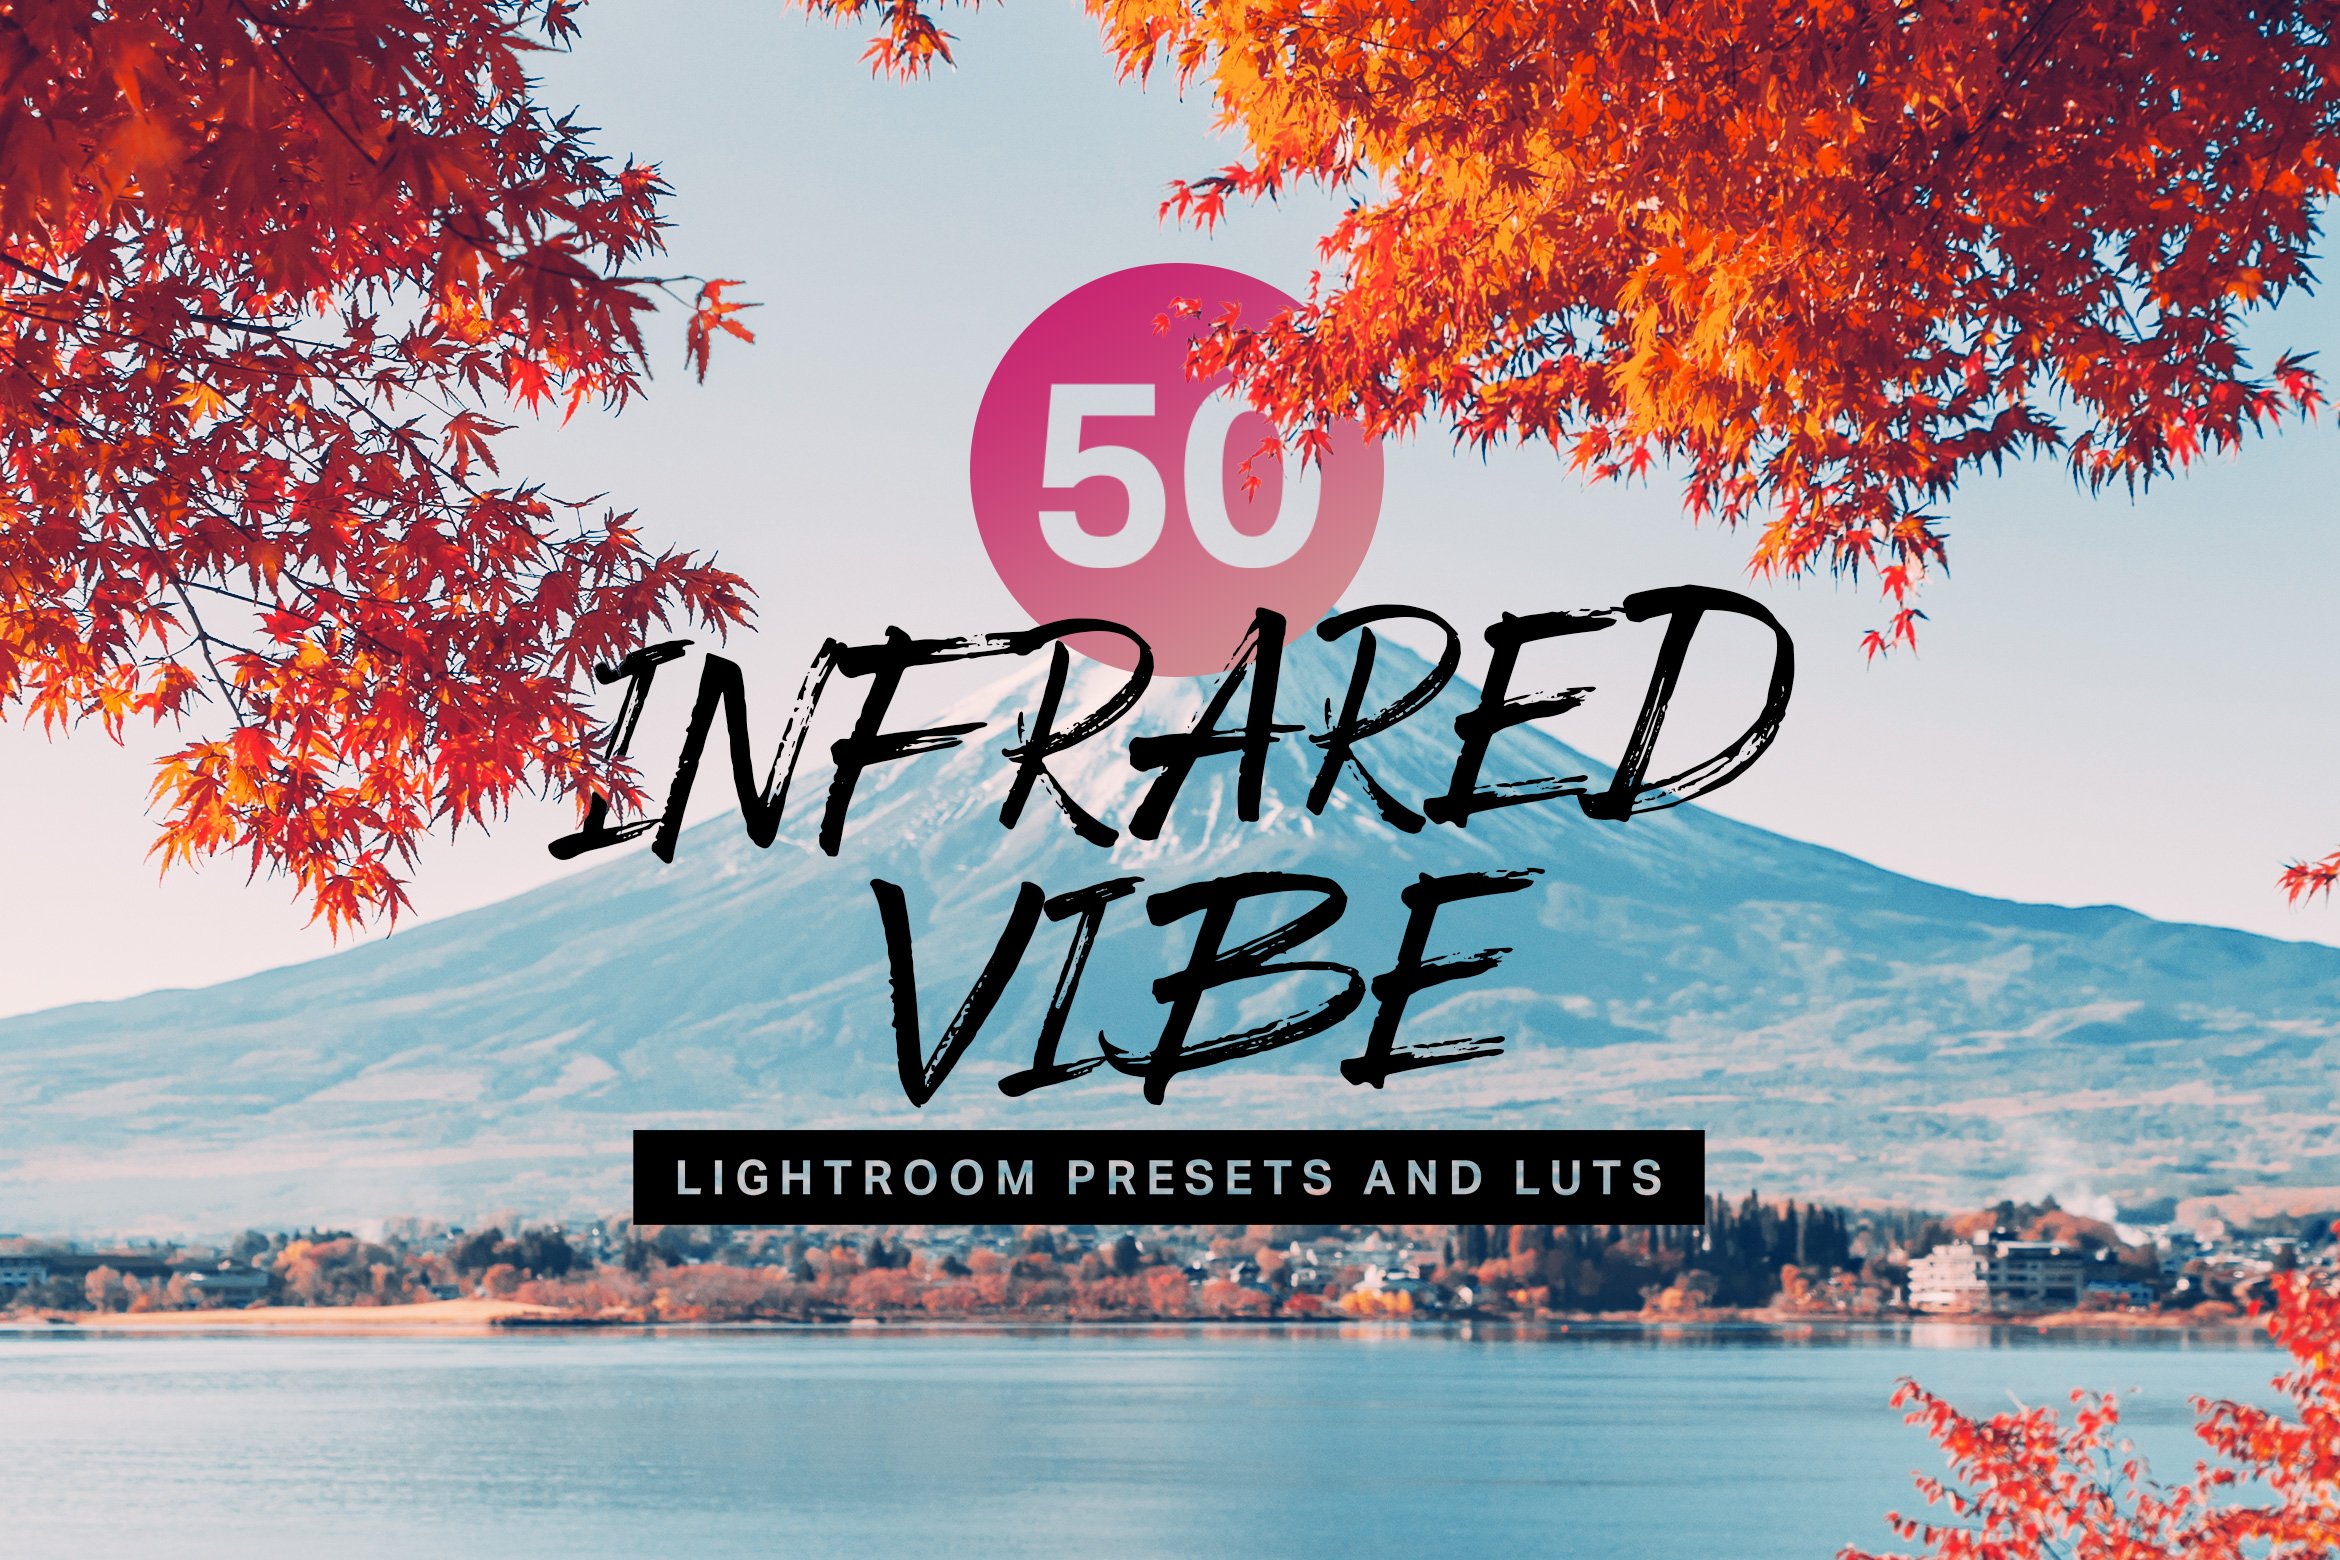 50 Infrared Vibe Lightroom Presetcover image.